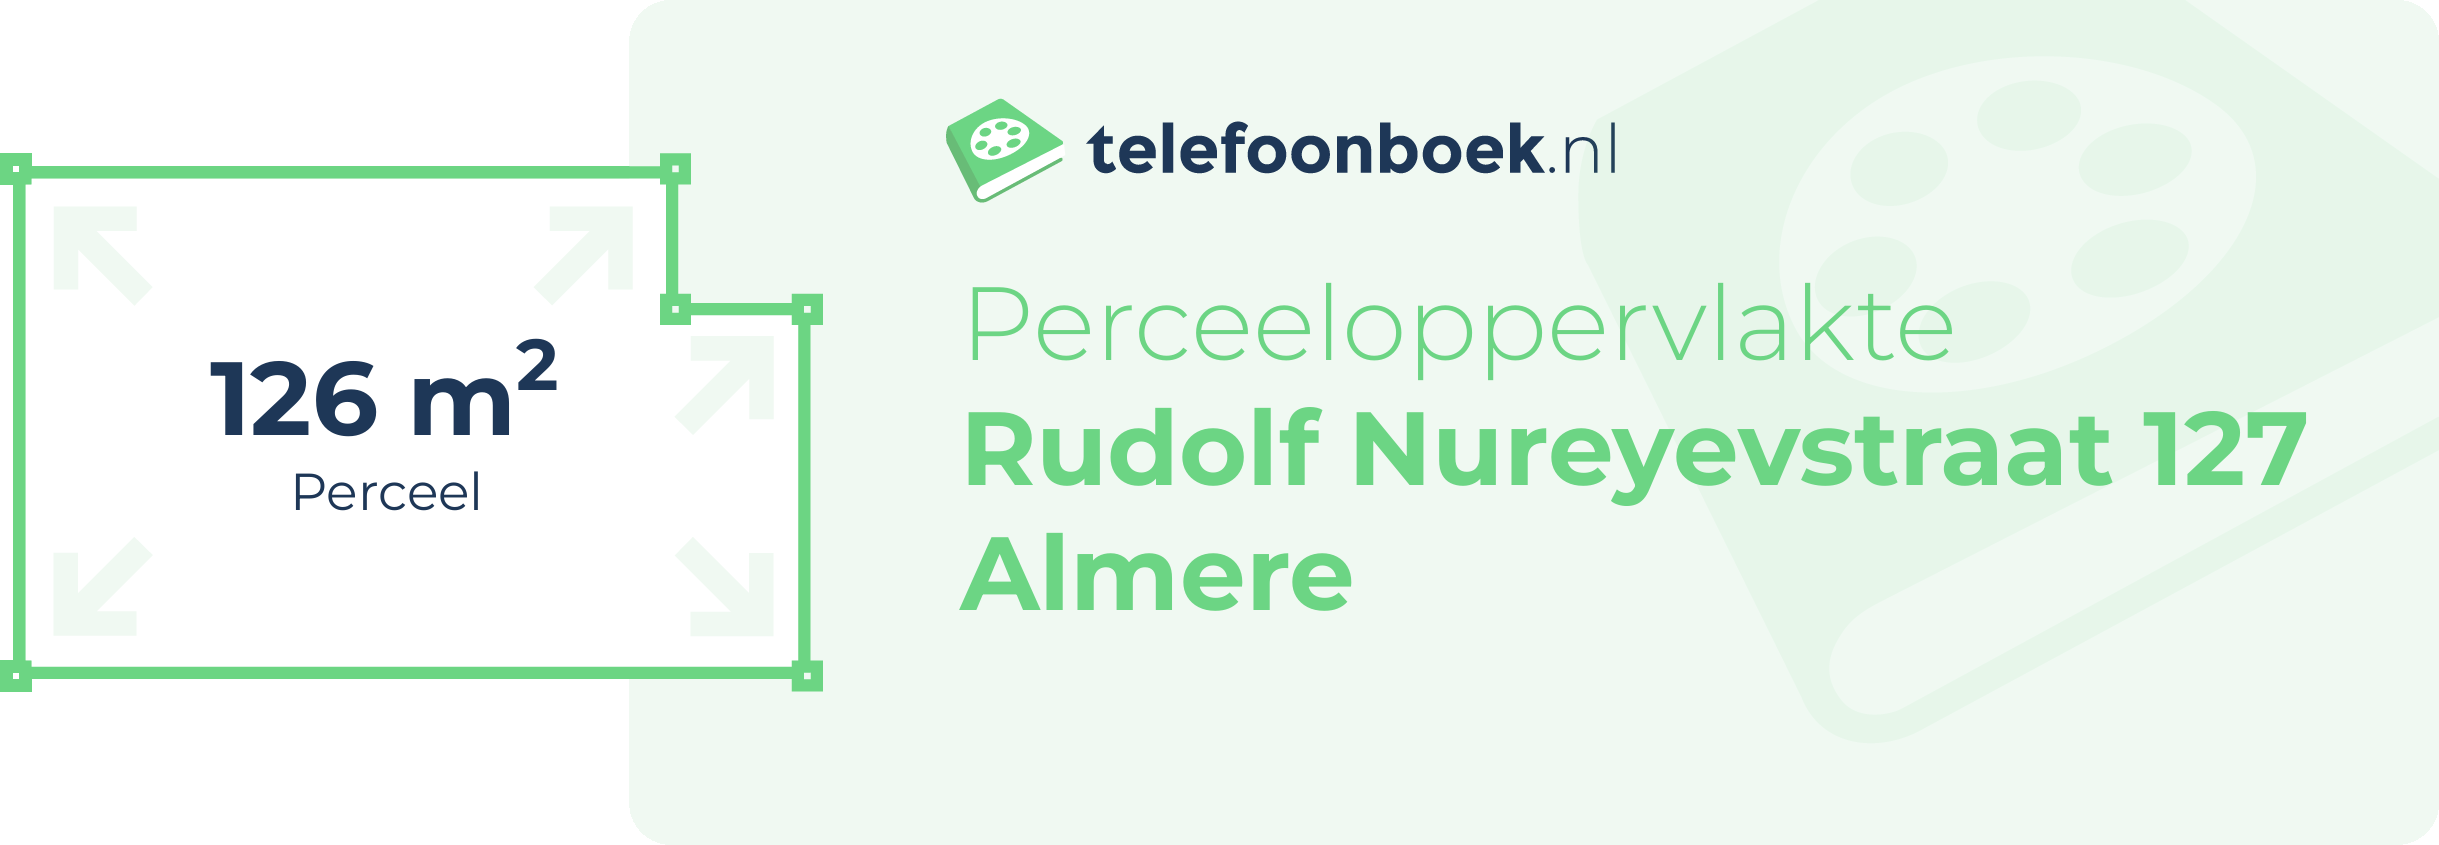 Perceeloppervlakte Rudolf Nureyevstraat 127 Almere